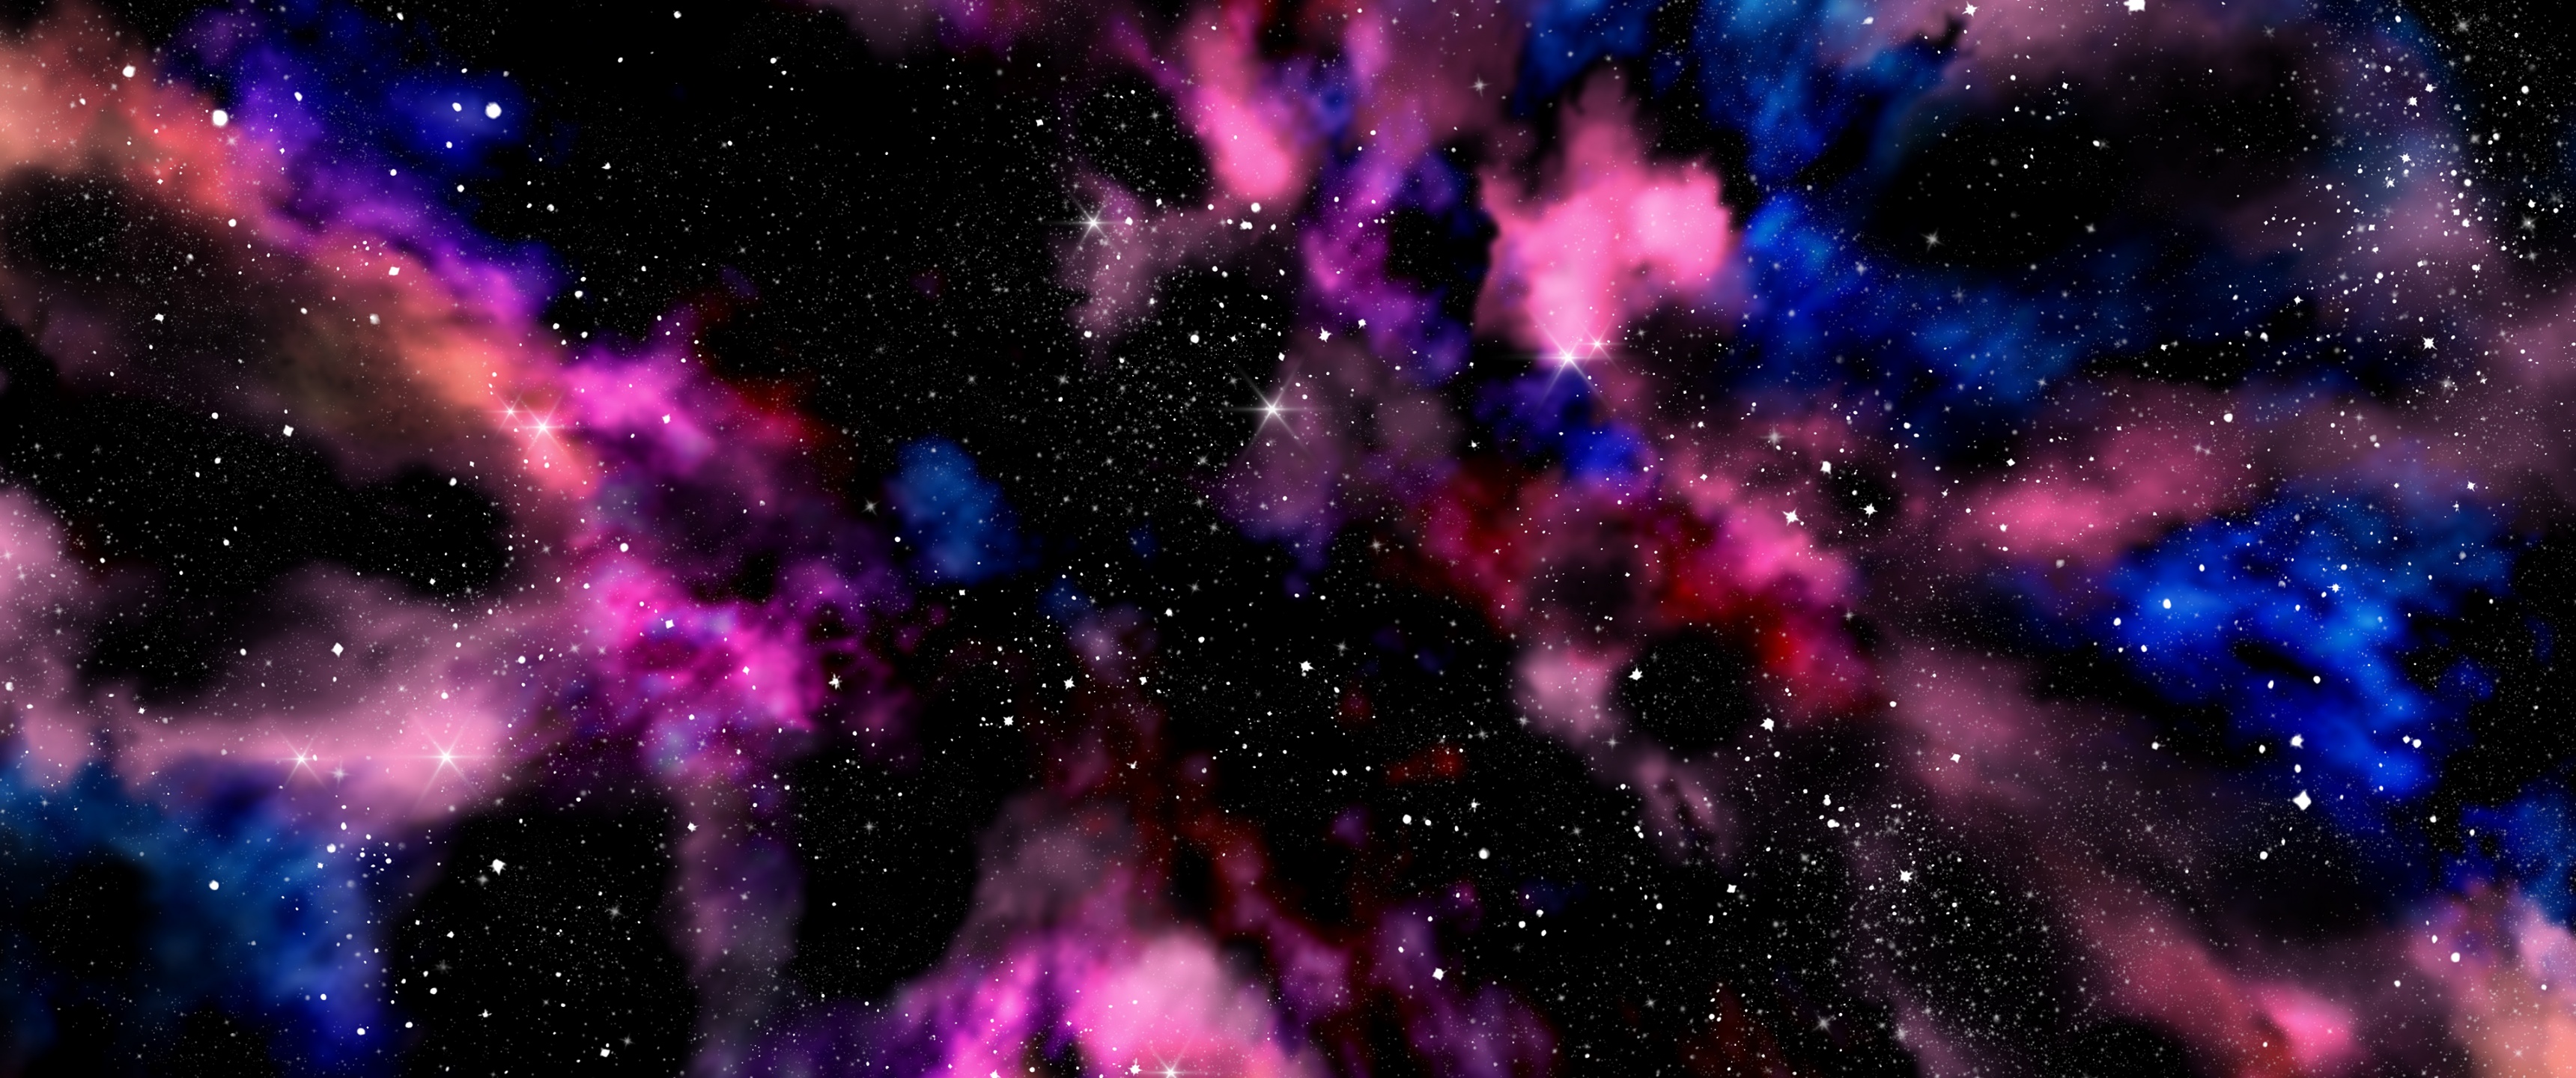 ne64-star-galaxy-night-sky-mountain-purple-pink-nature-space-wallpaper